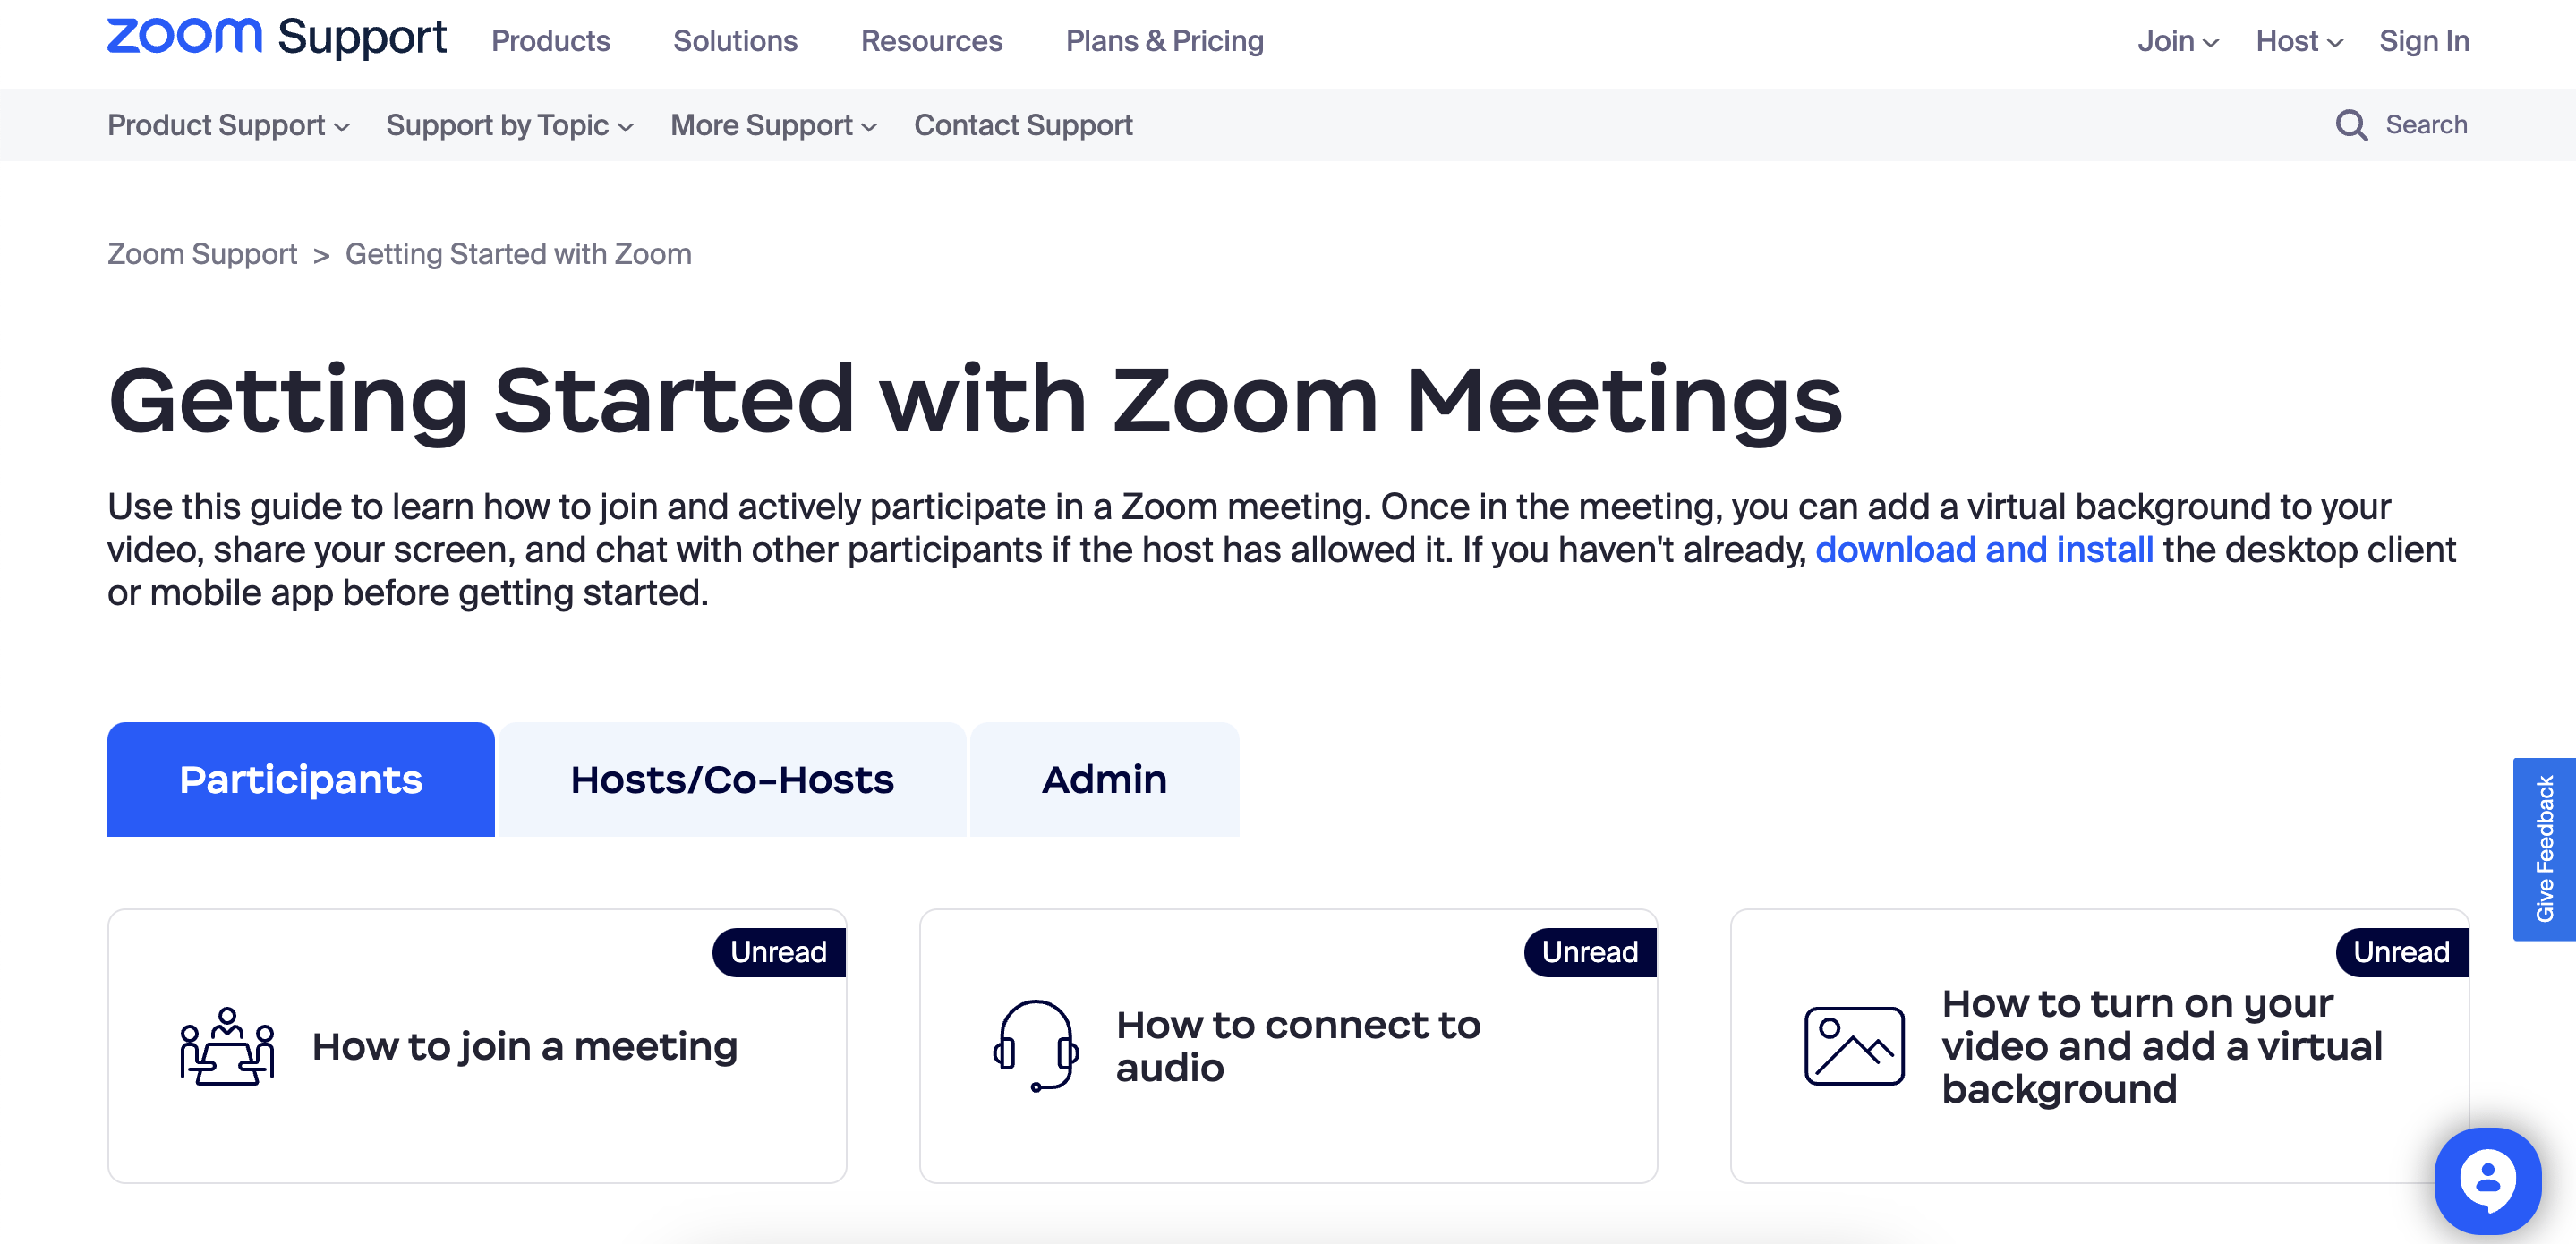 Zoom self-service portal example_2